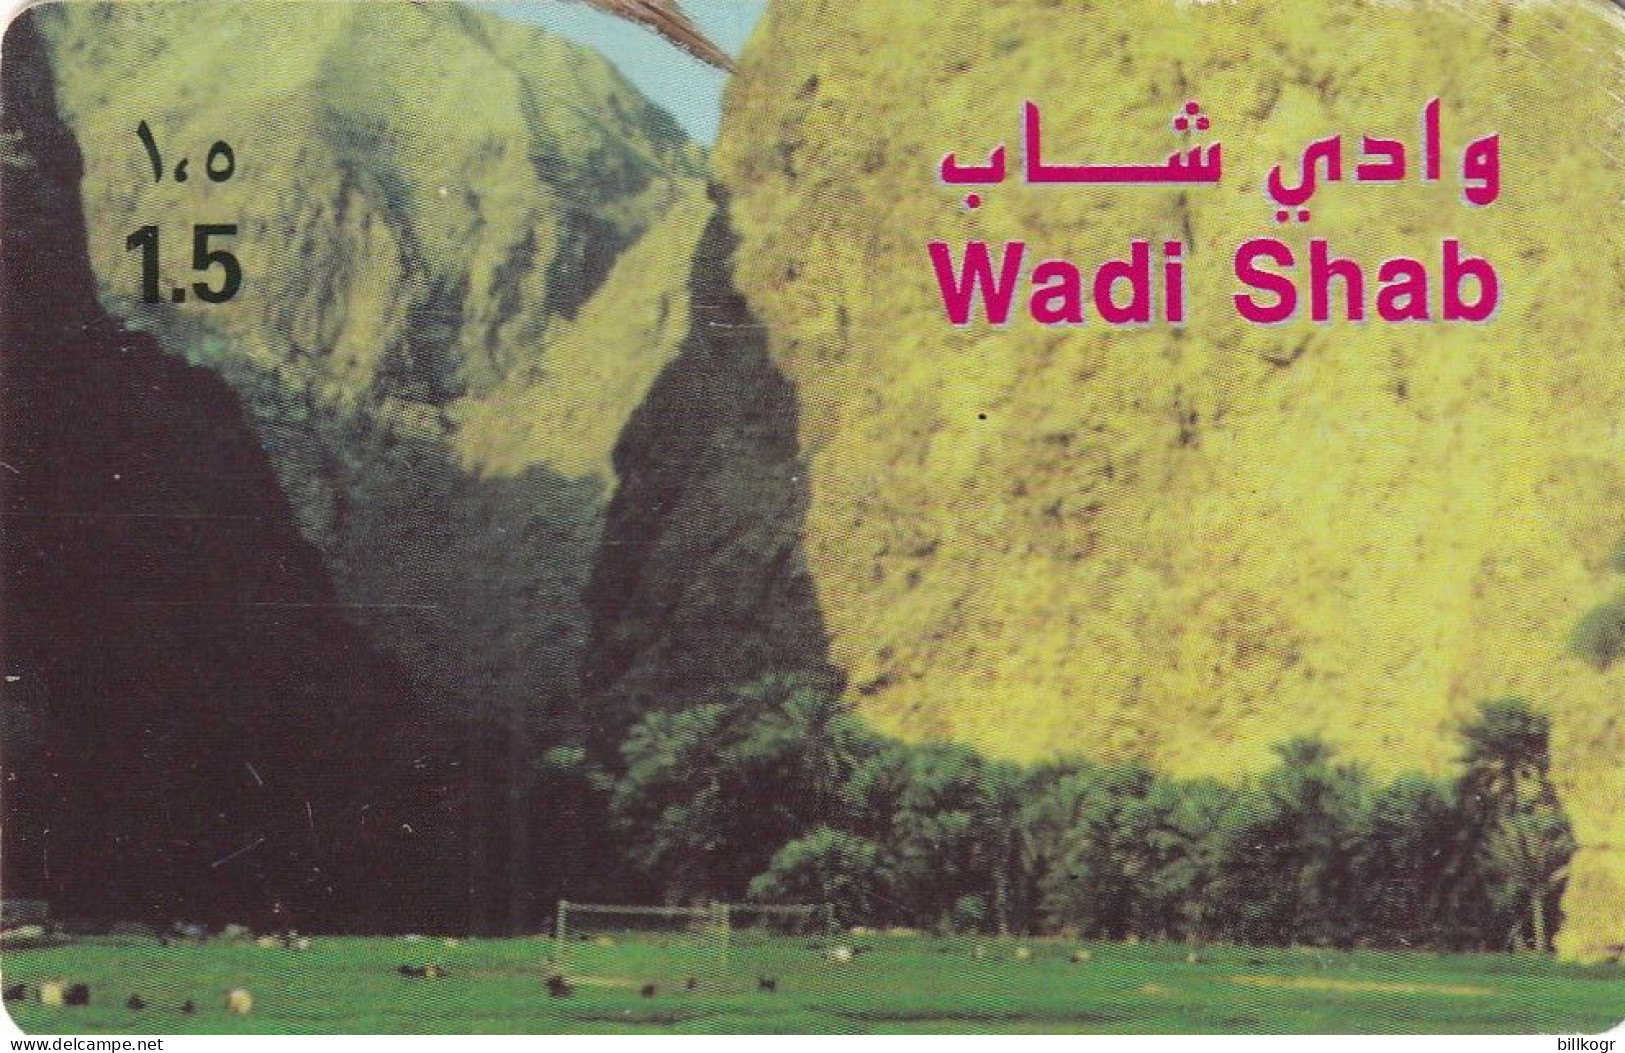 OMAN - Wadi Shab, Alpha Prepaid Card RO 1.5, Used - Oman